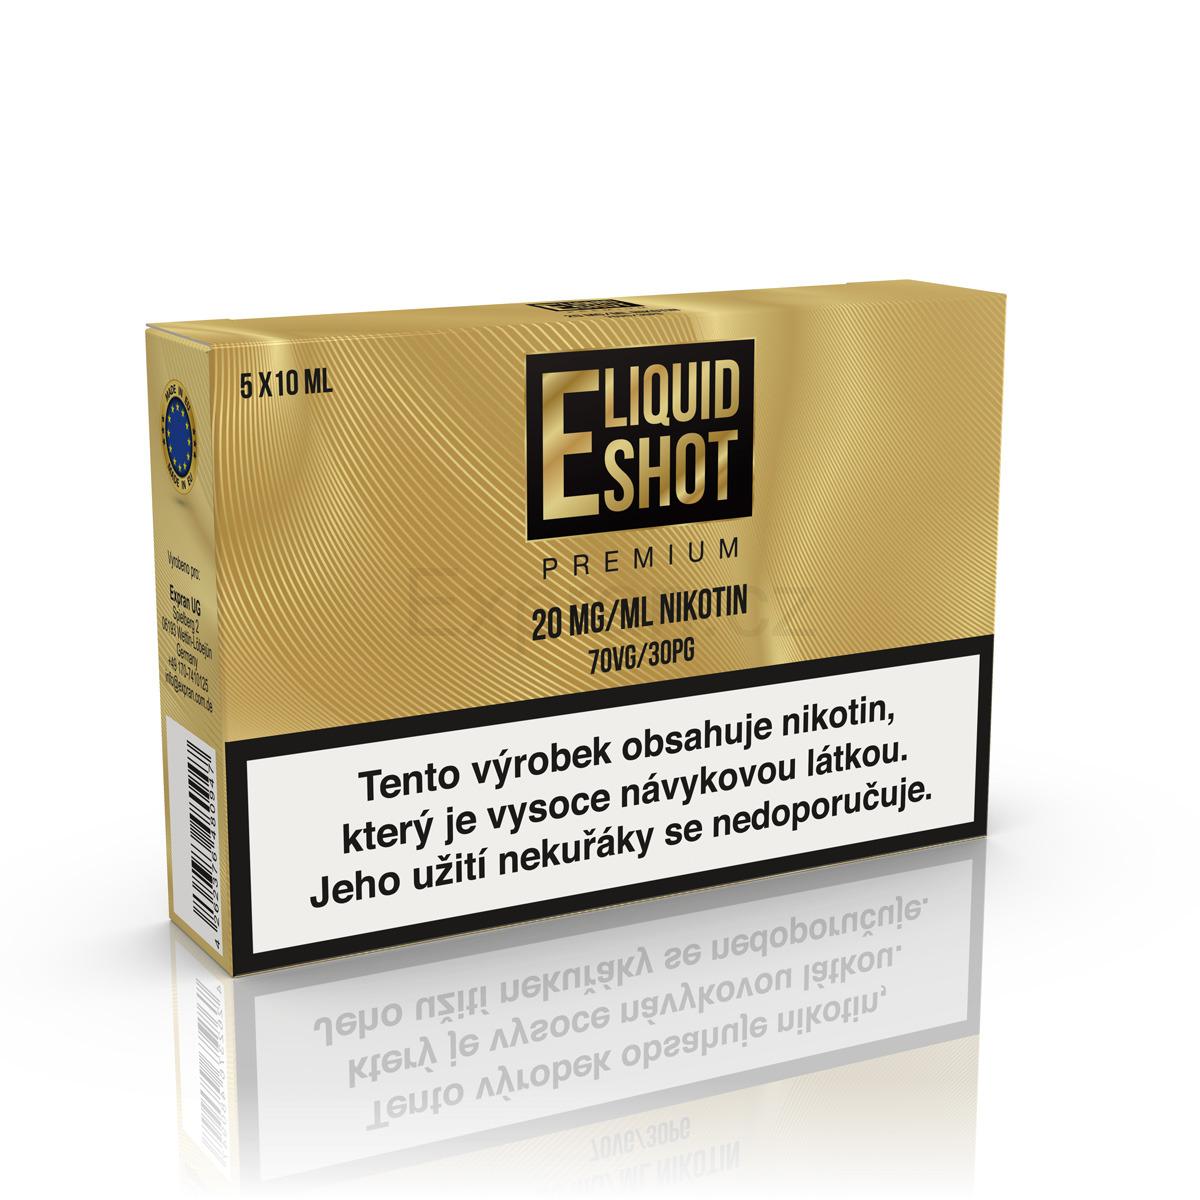 Expran Gmbh (DE) E-Liquid Shot Booster Premium 20mg - 5x10ml (VG70/PG30)